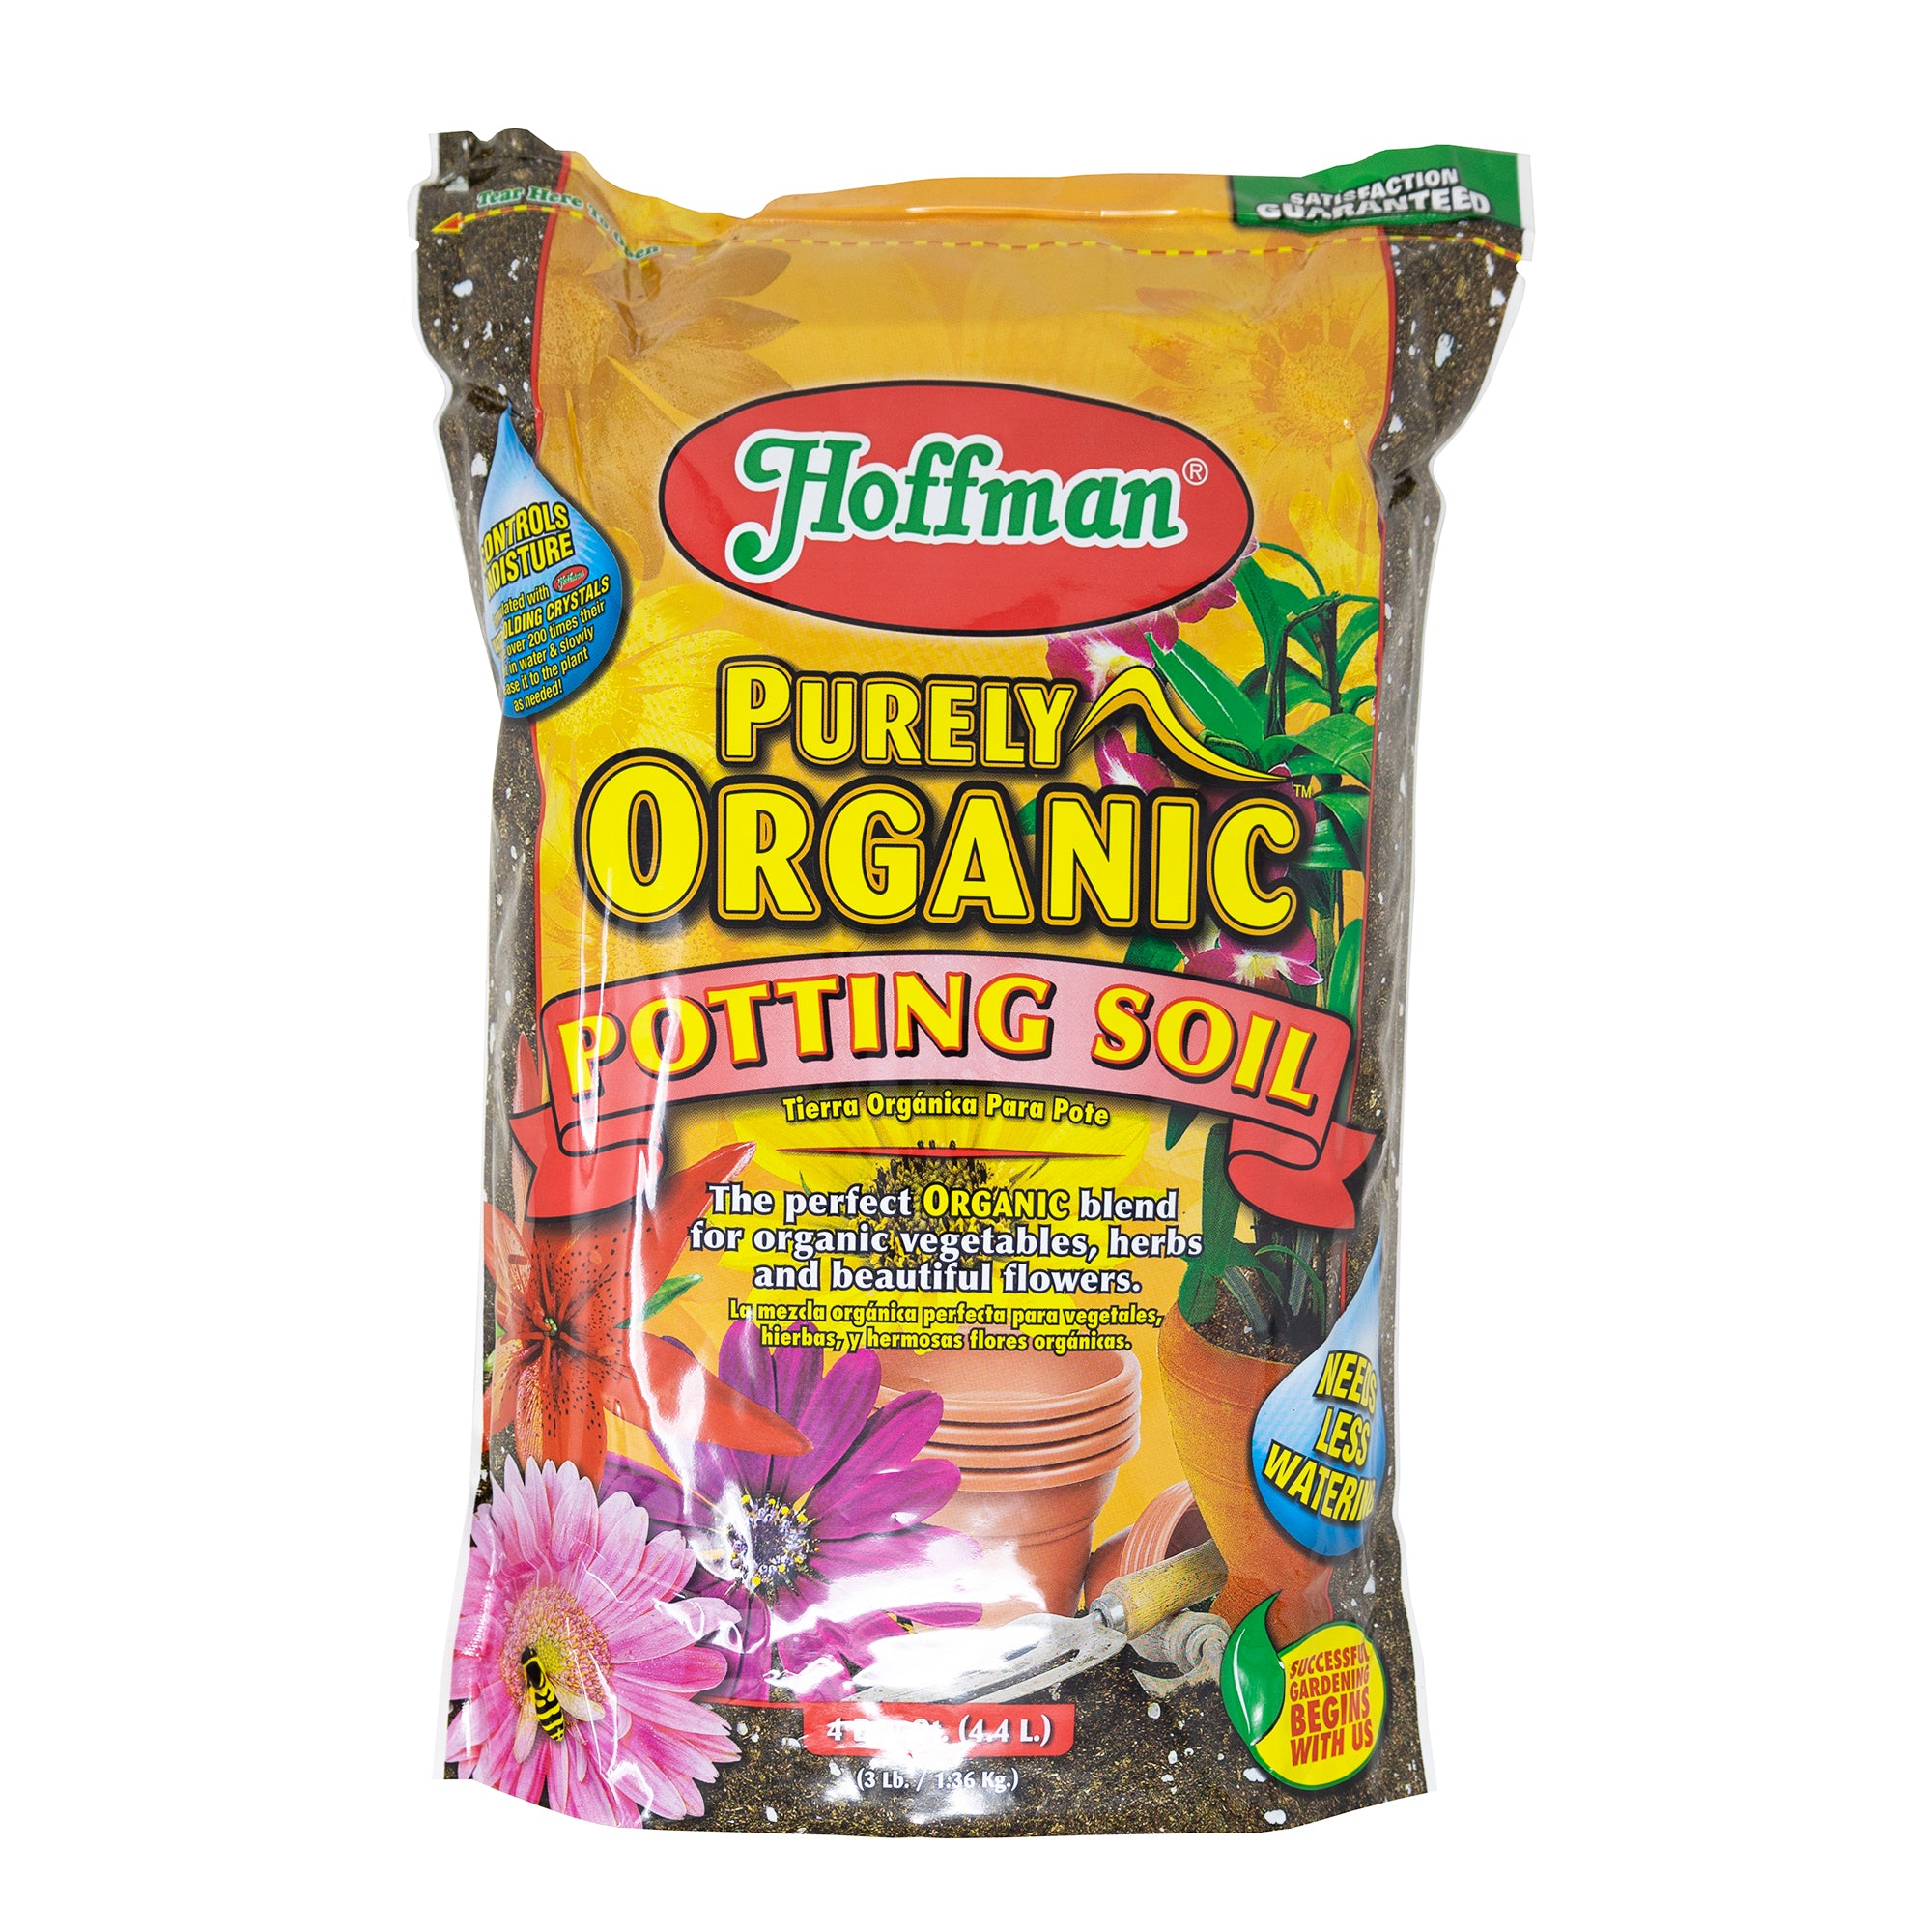 Hoffman Purely Organic Potting Soil Plus Moisture Control, 4 Quarts